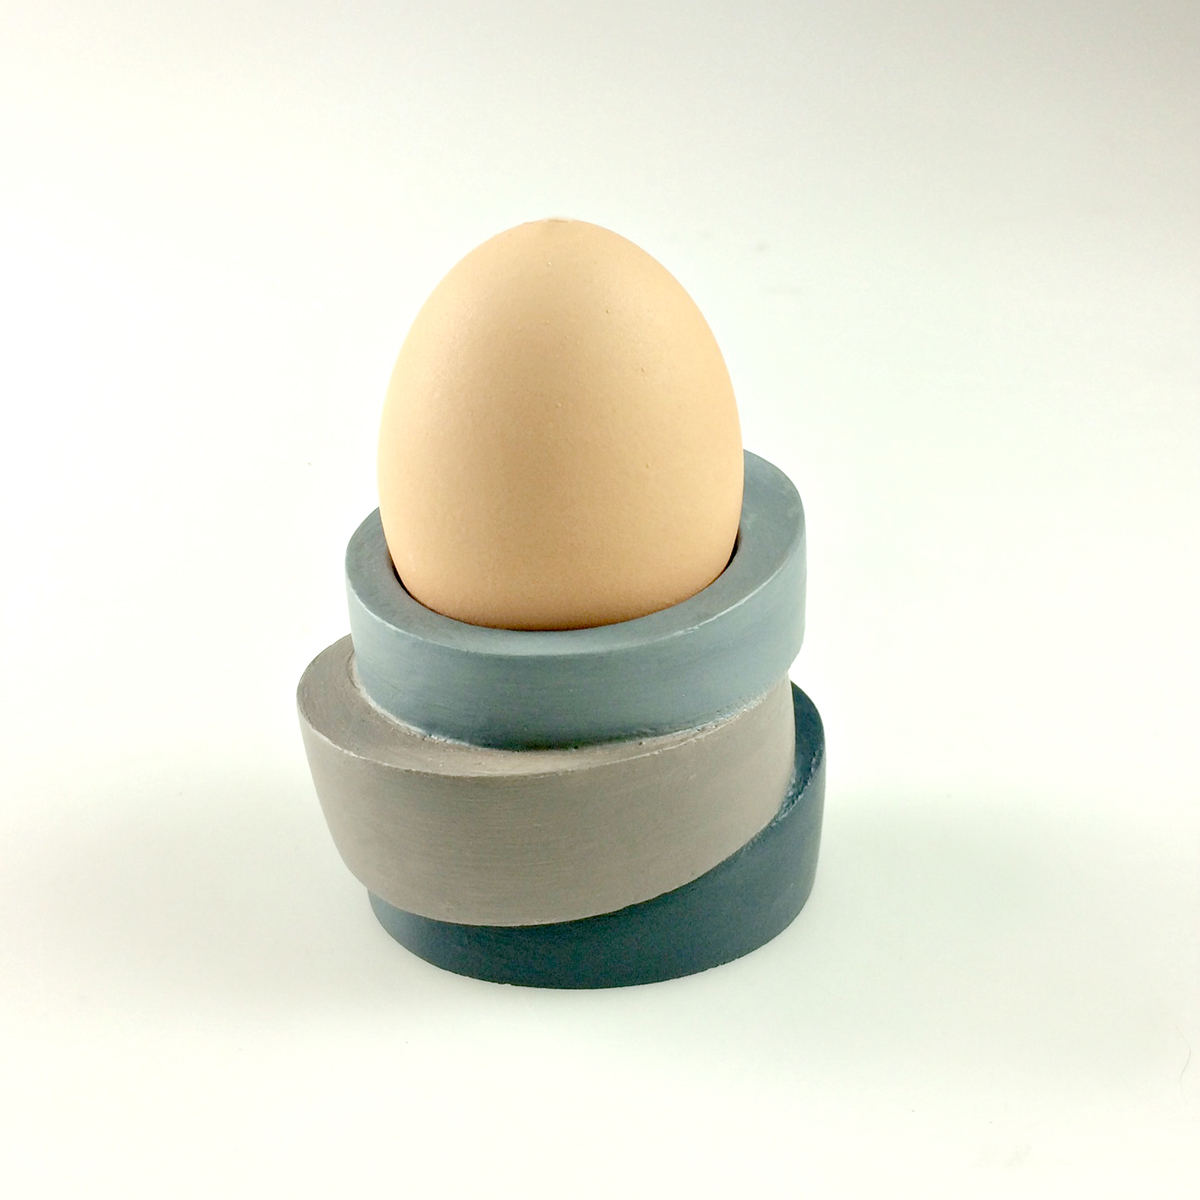 egg cup holder stones organic stacking balance zen natural Foam model